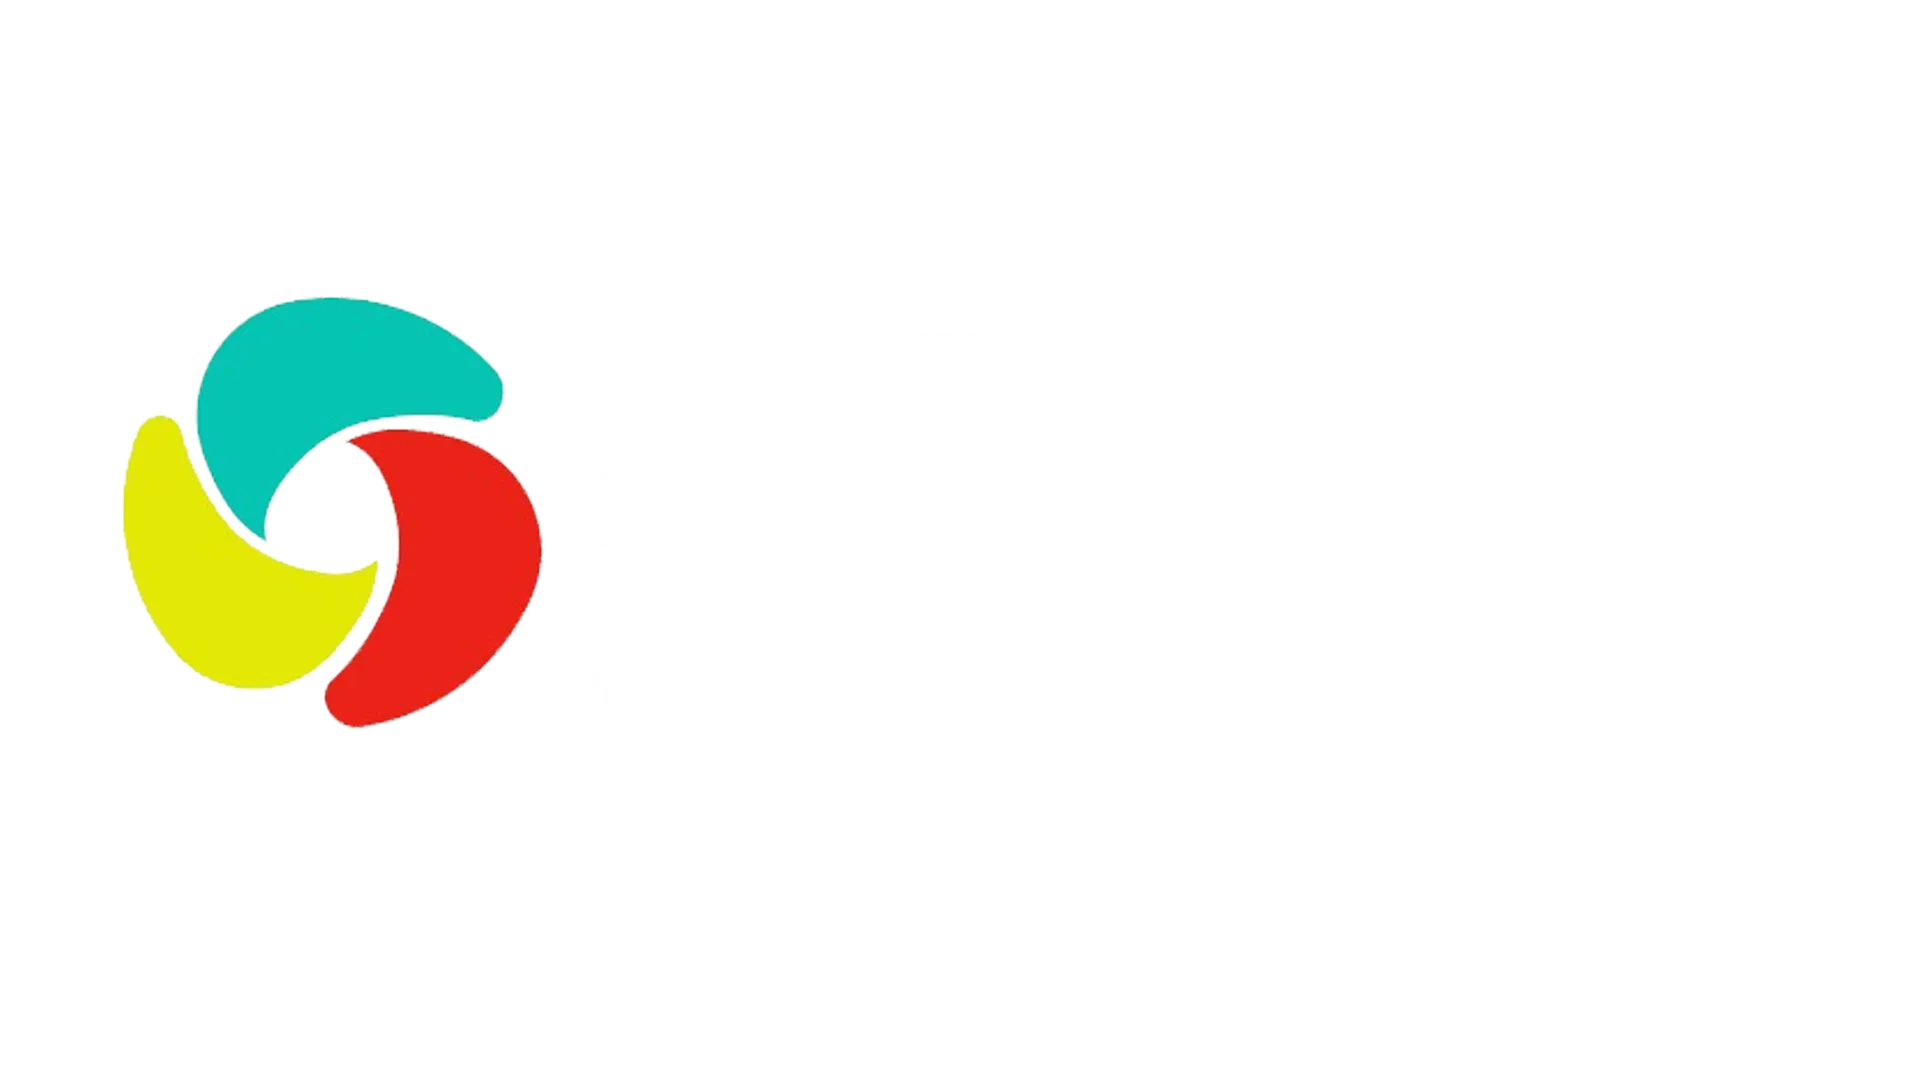 ekoaeducacao.com.br